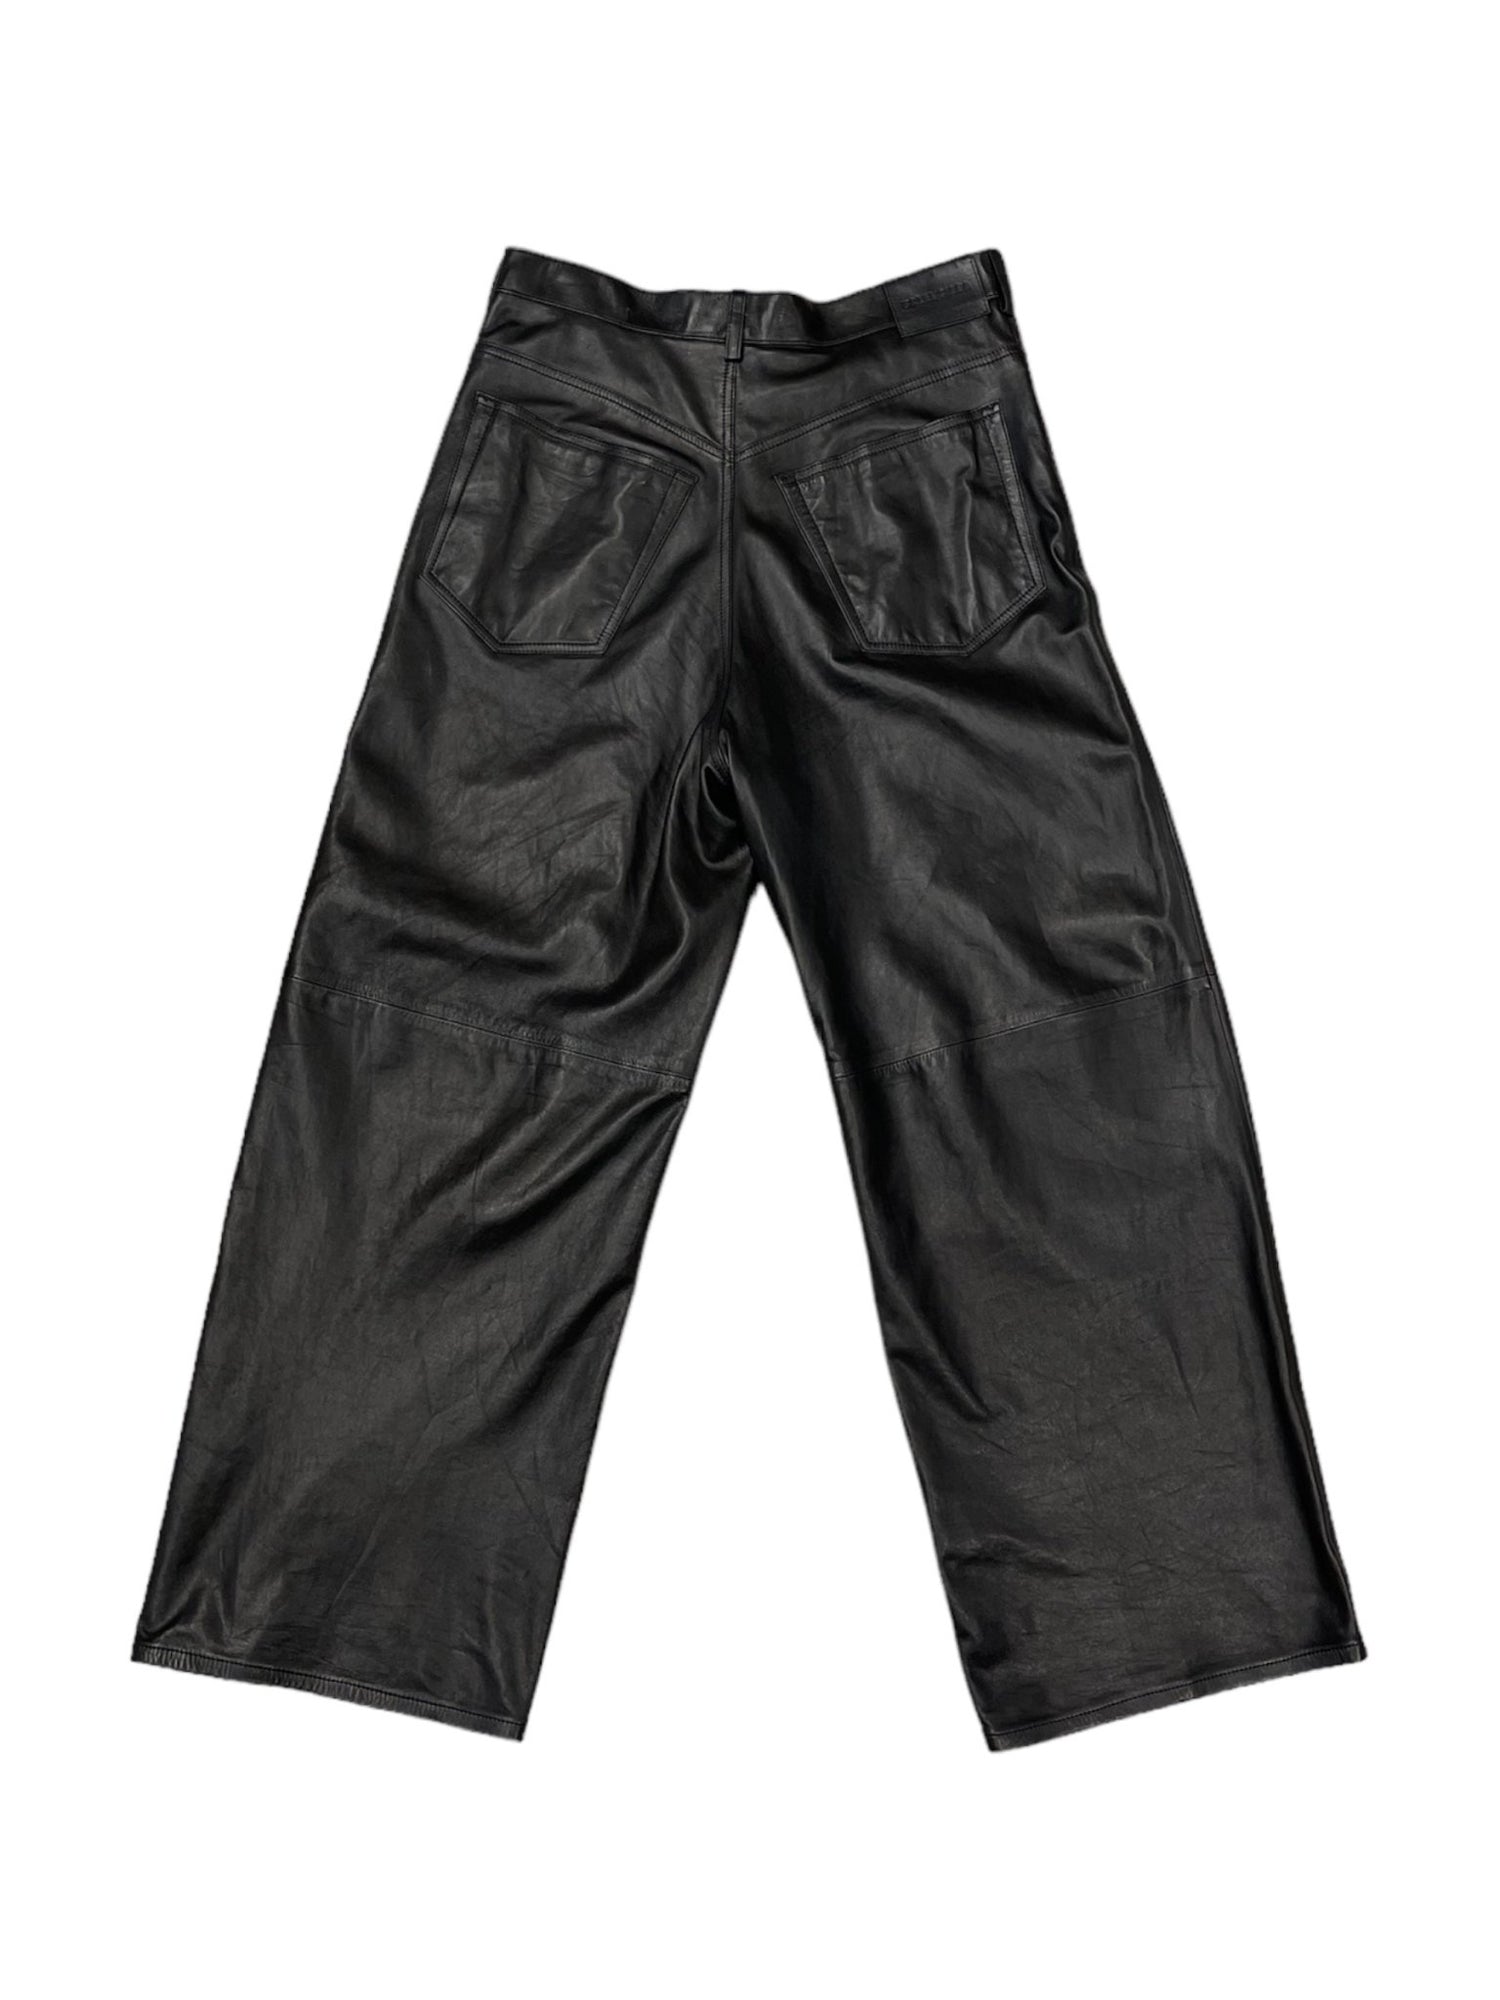 Balenciaga Pantalon en cuir Noir 38 - Les Folies d&